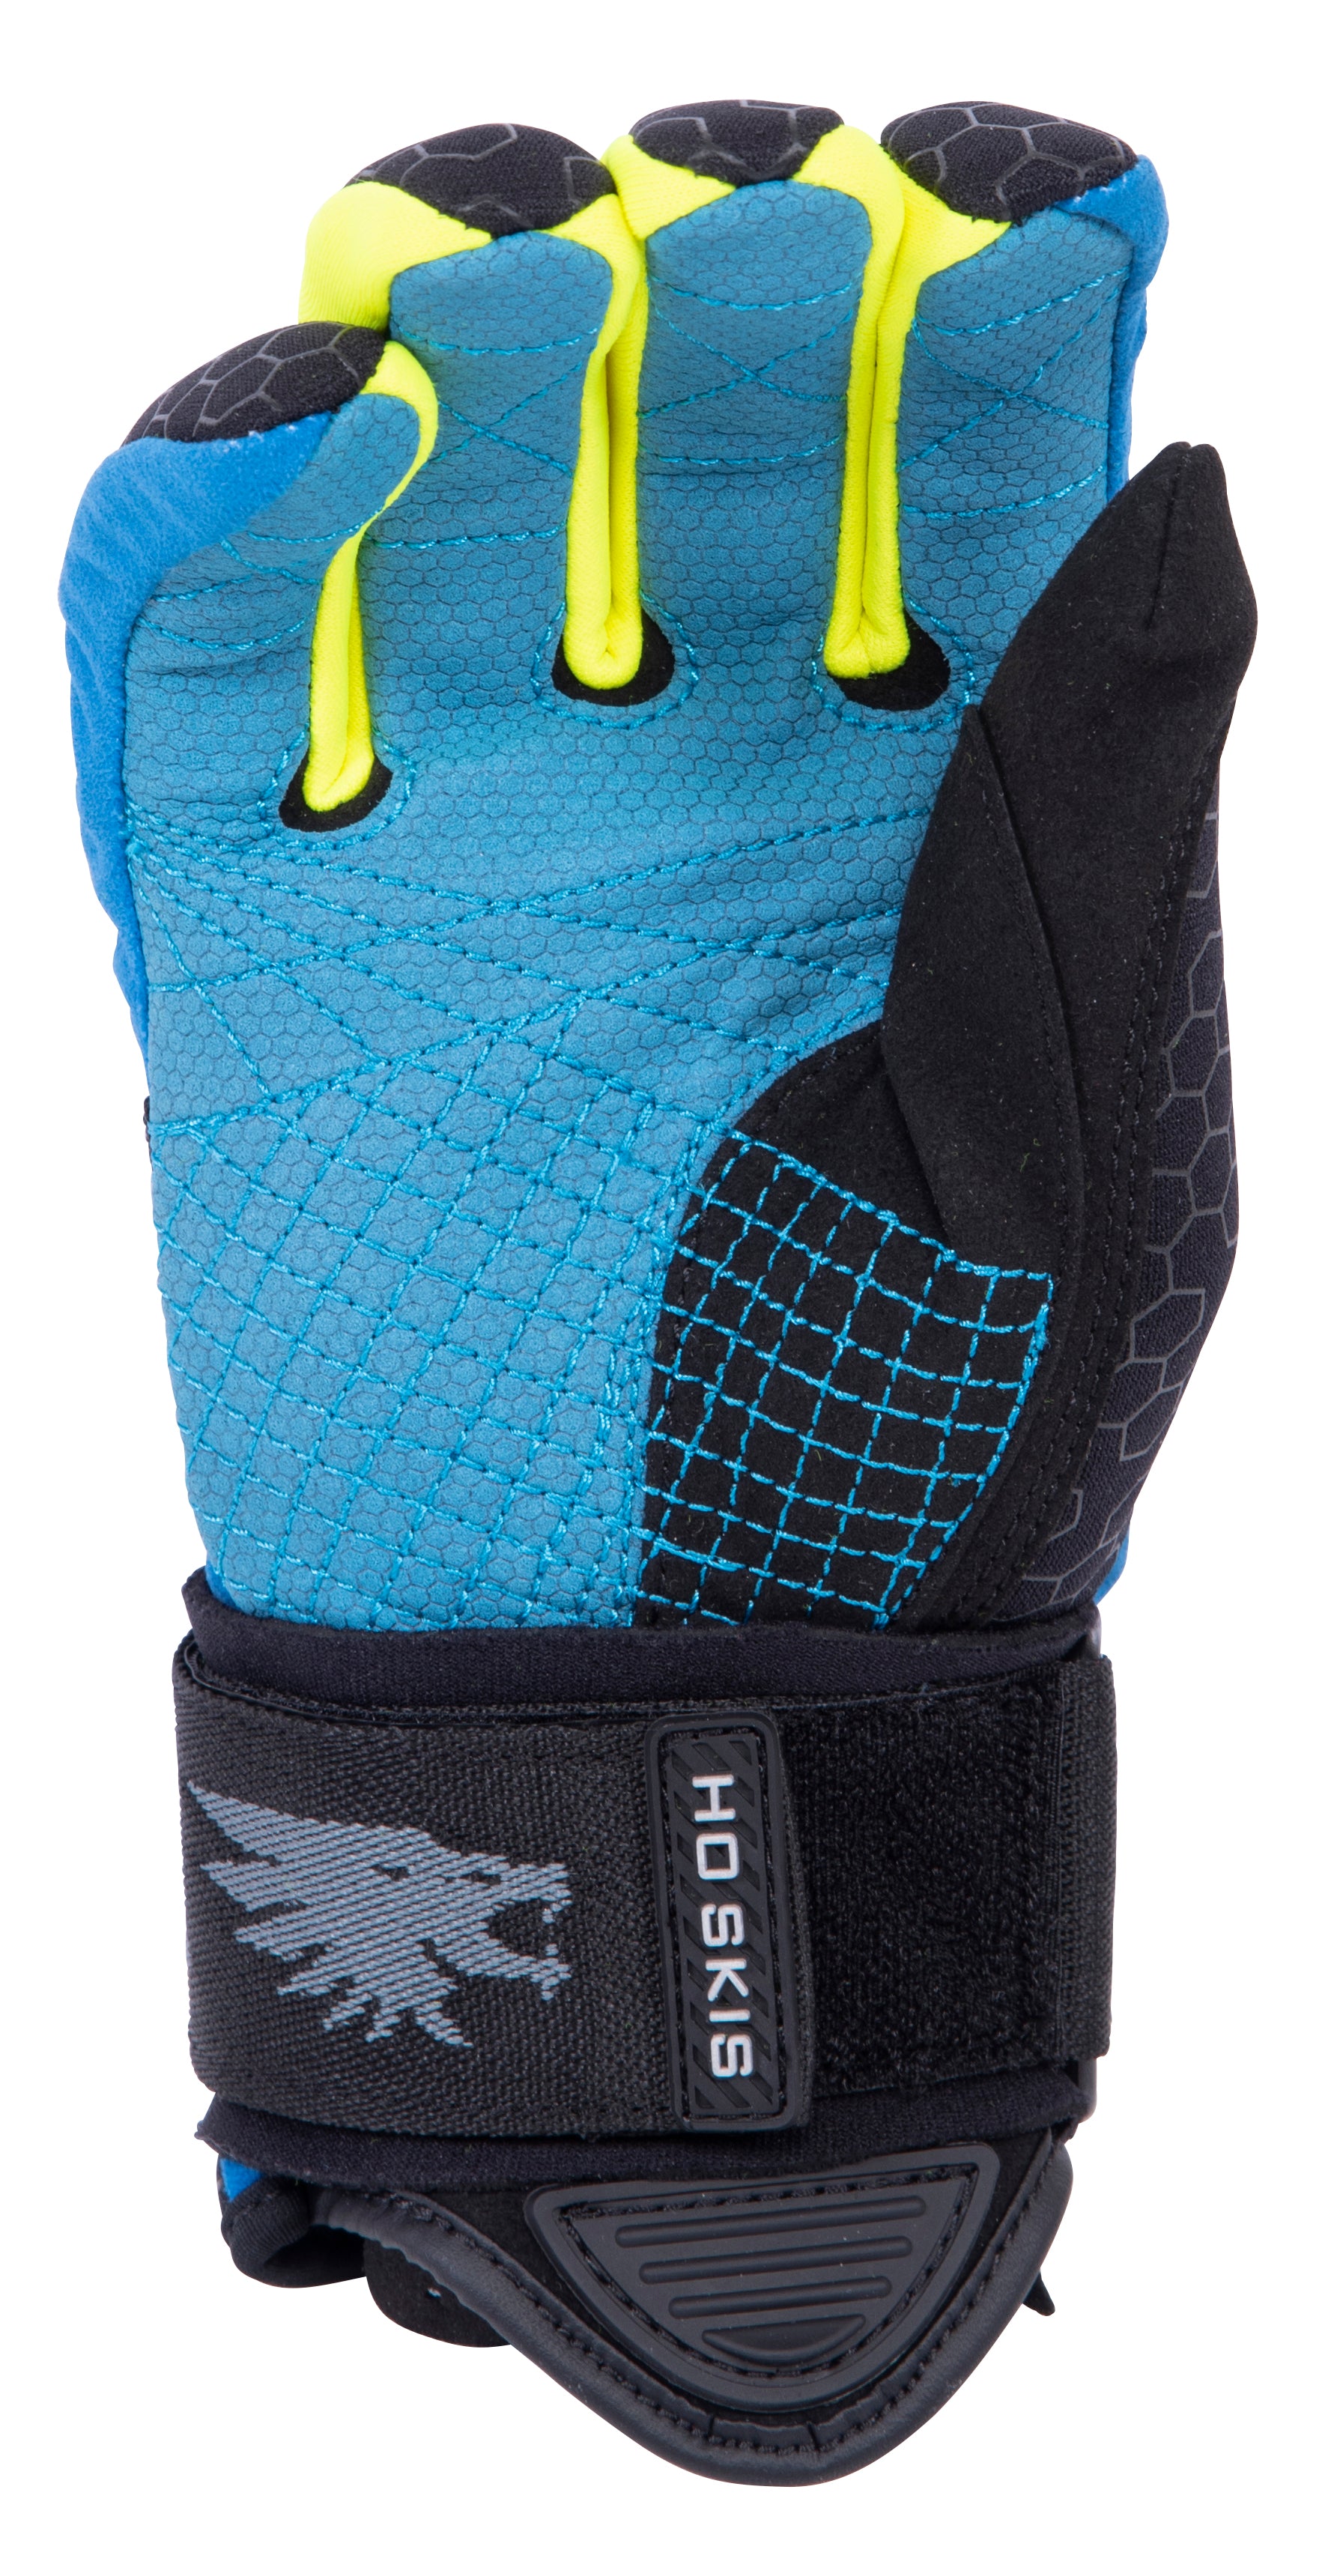 HO Syndicate Legend Water Ski Glove 2020 - 88 Gear